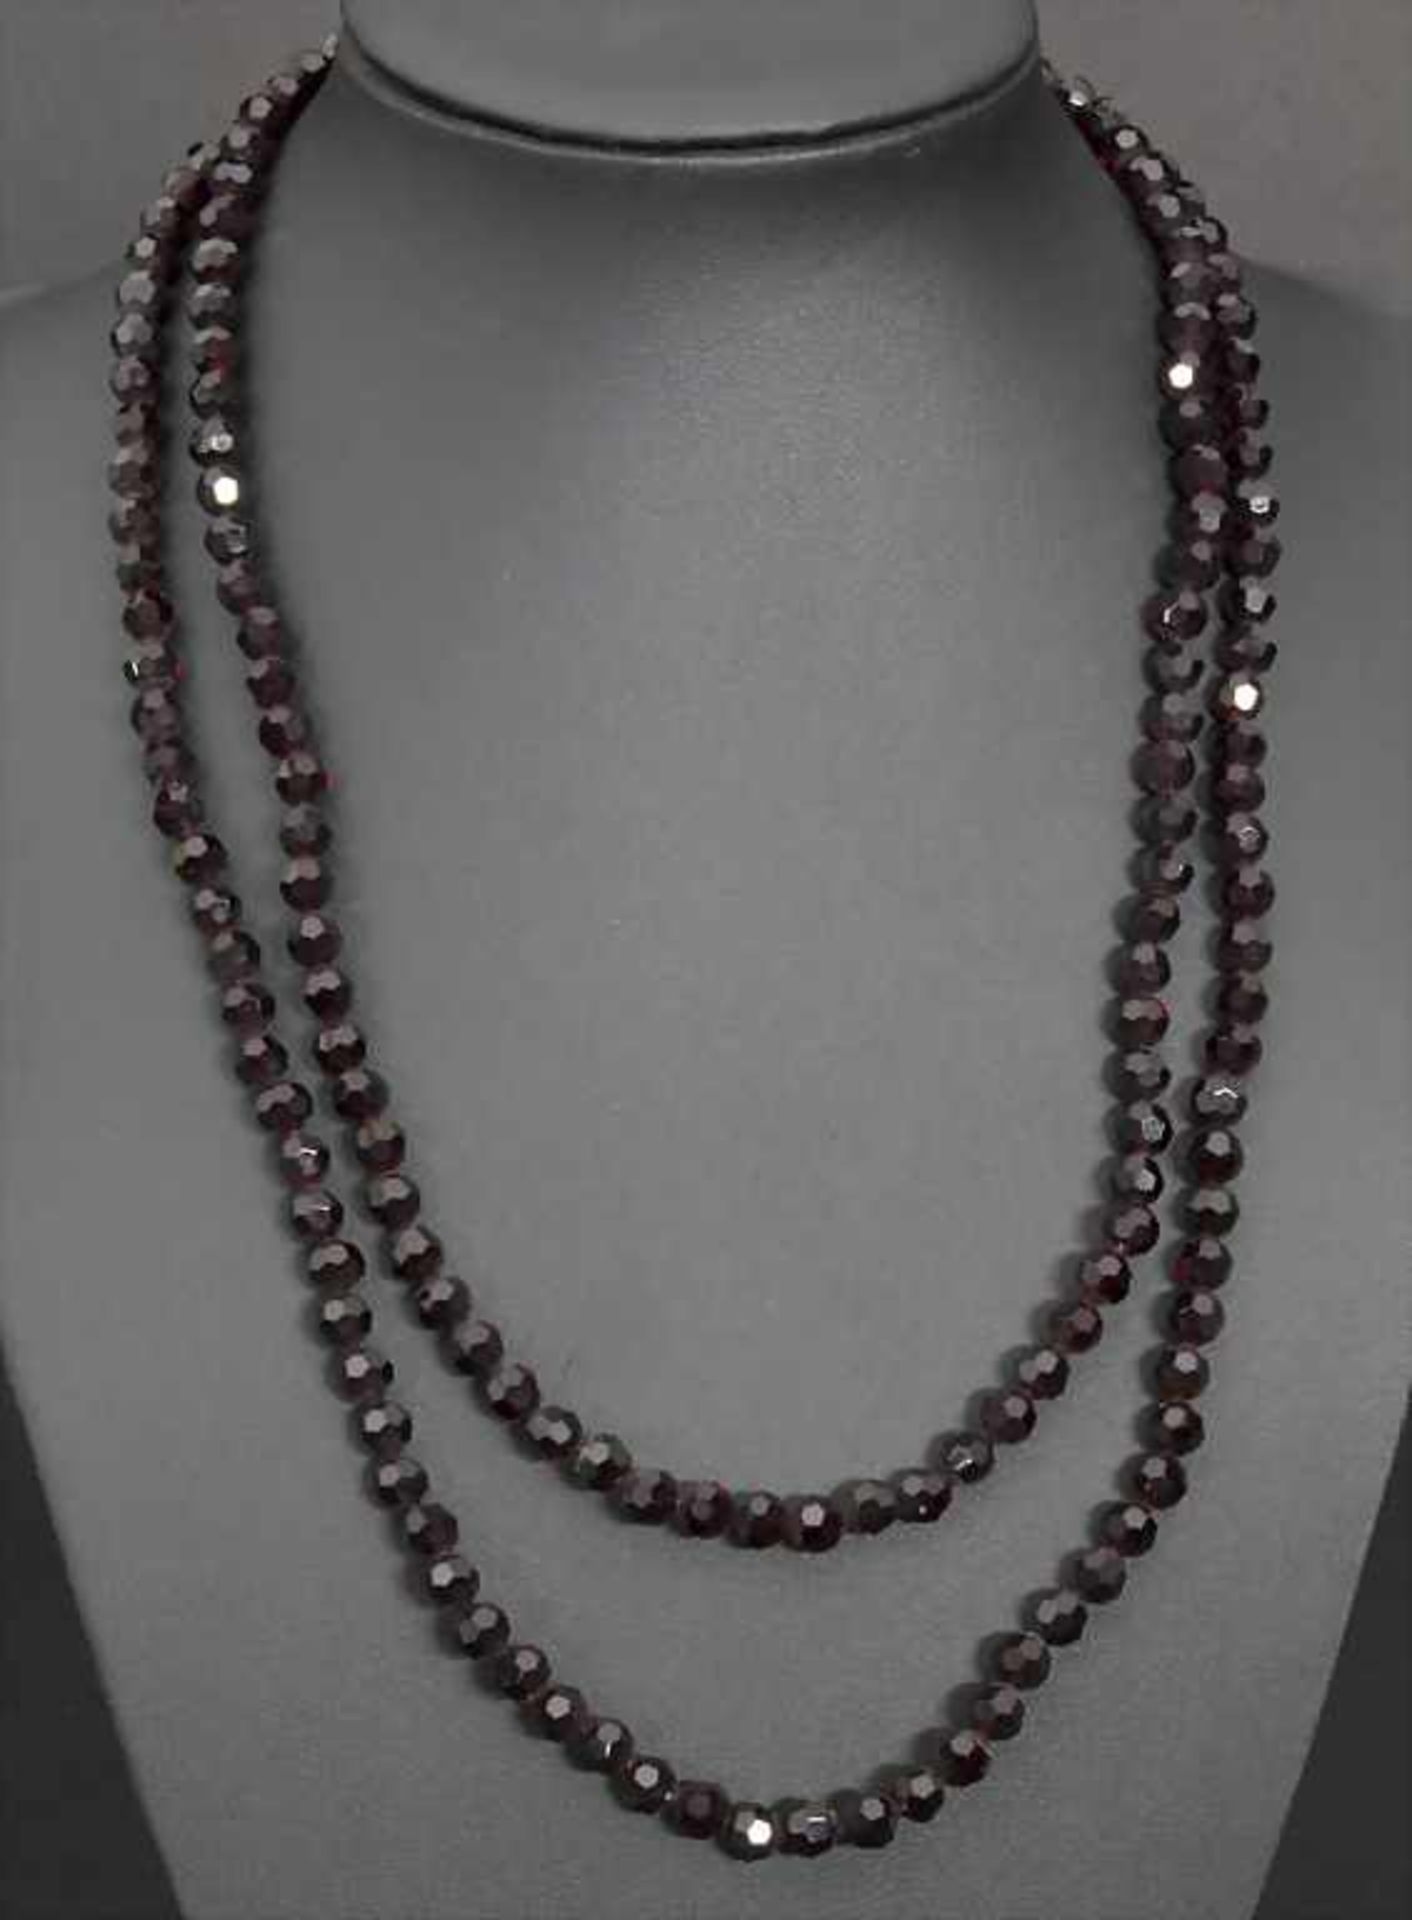 Granat-Collier / A garnet necklace - Image 3 of 6